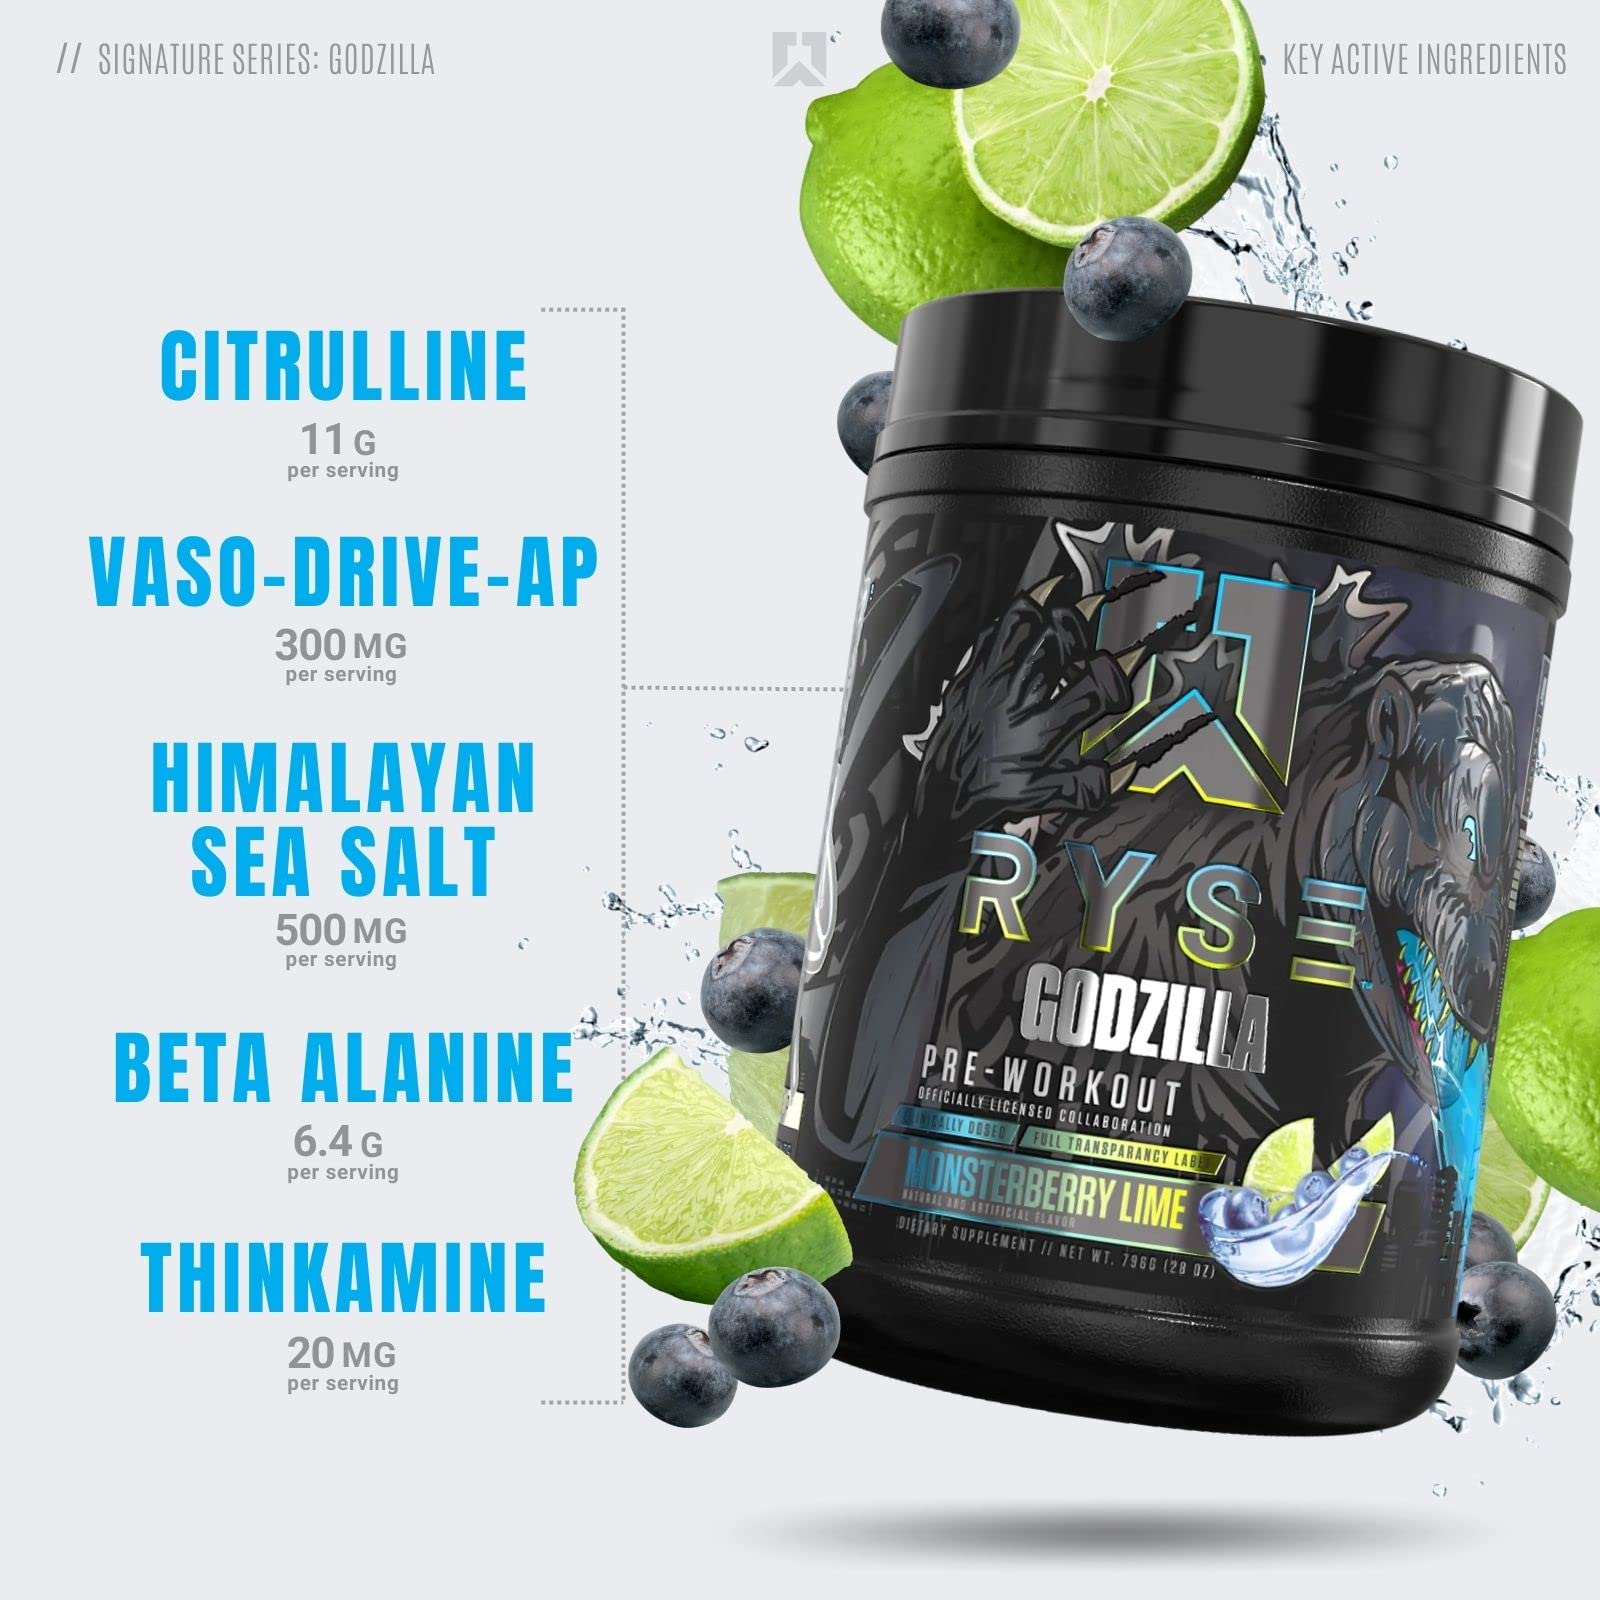 Ryse Signature Series Godzilla Pre Workout | Pump, Energy, Strength, and Focus | Citrulline, Beta-Alanine, Caffeine | 40 Servings (Monsterberry Lime)